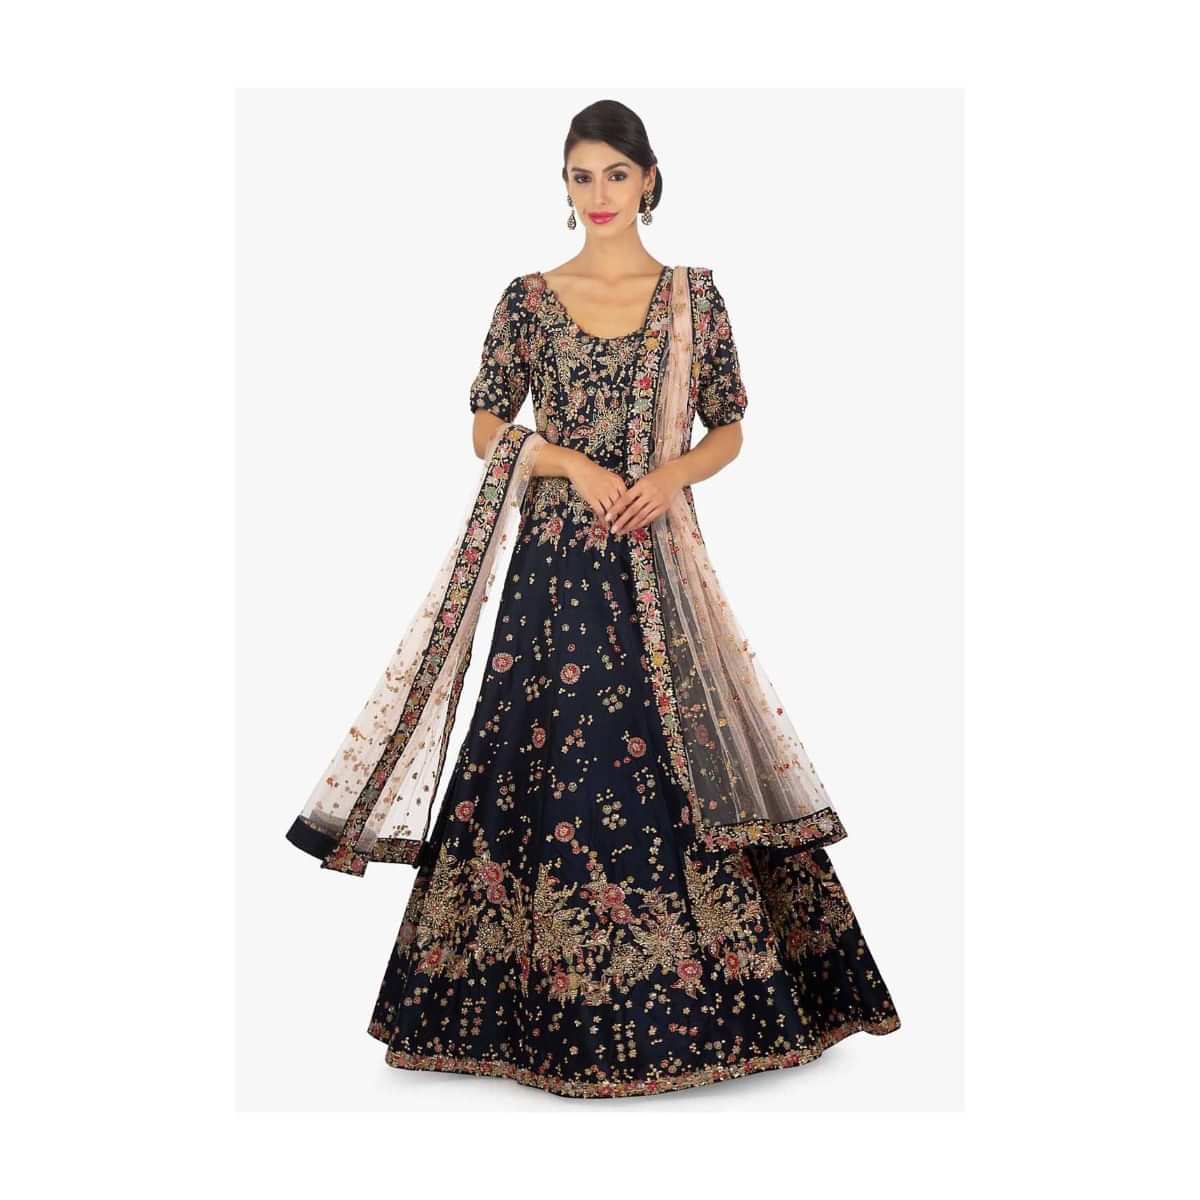 Midnight Blue Anarkali Gown In Zari And Sequins Floral Motif Online - Kalki Fashion